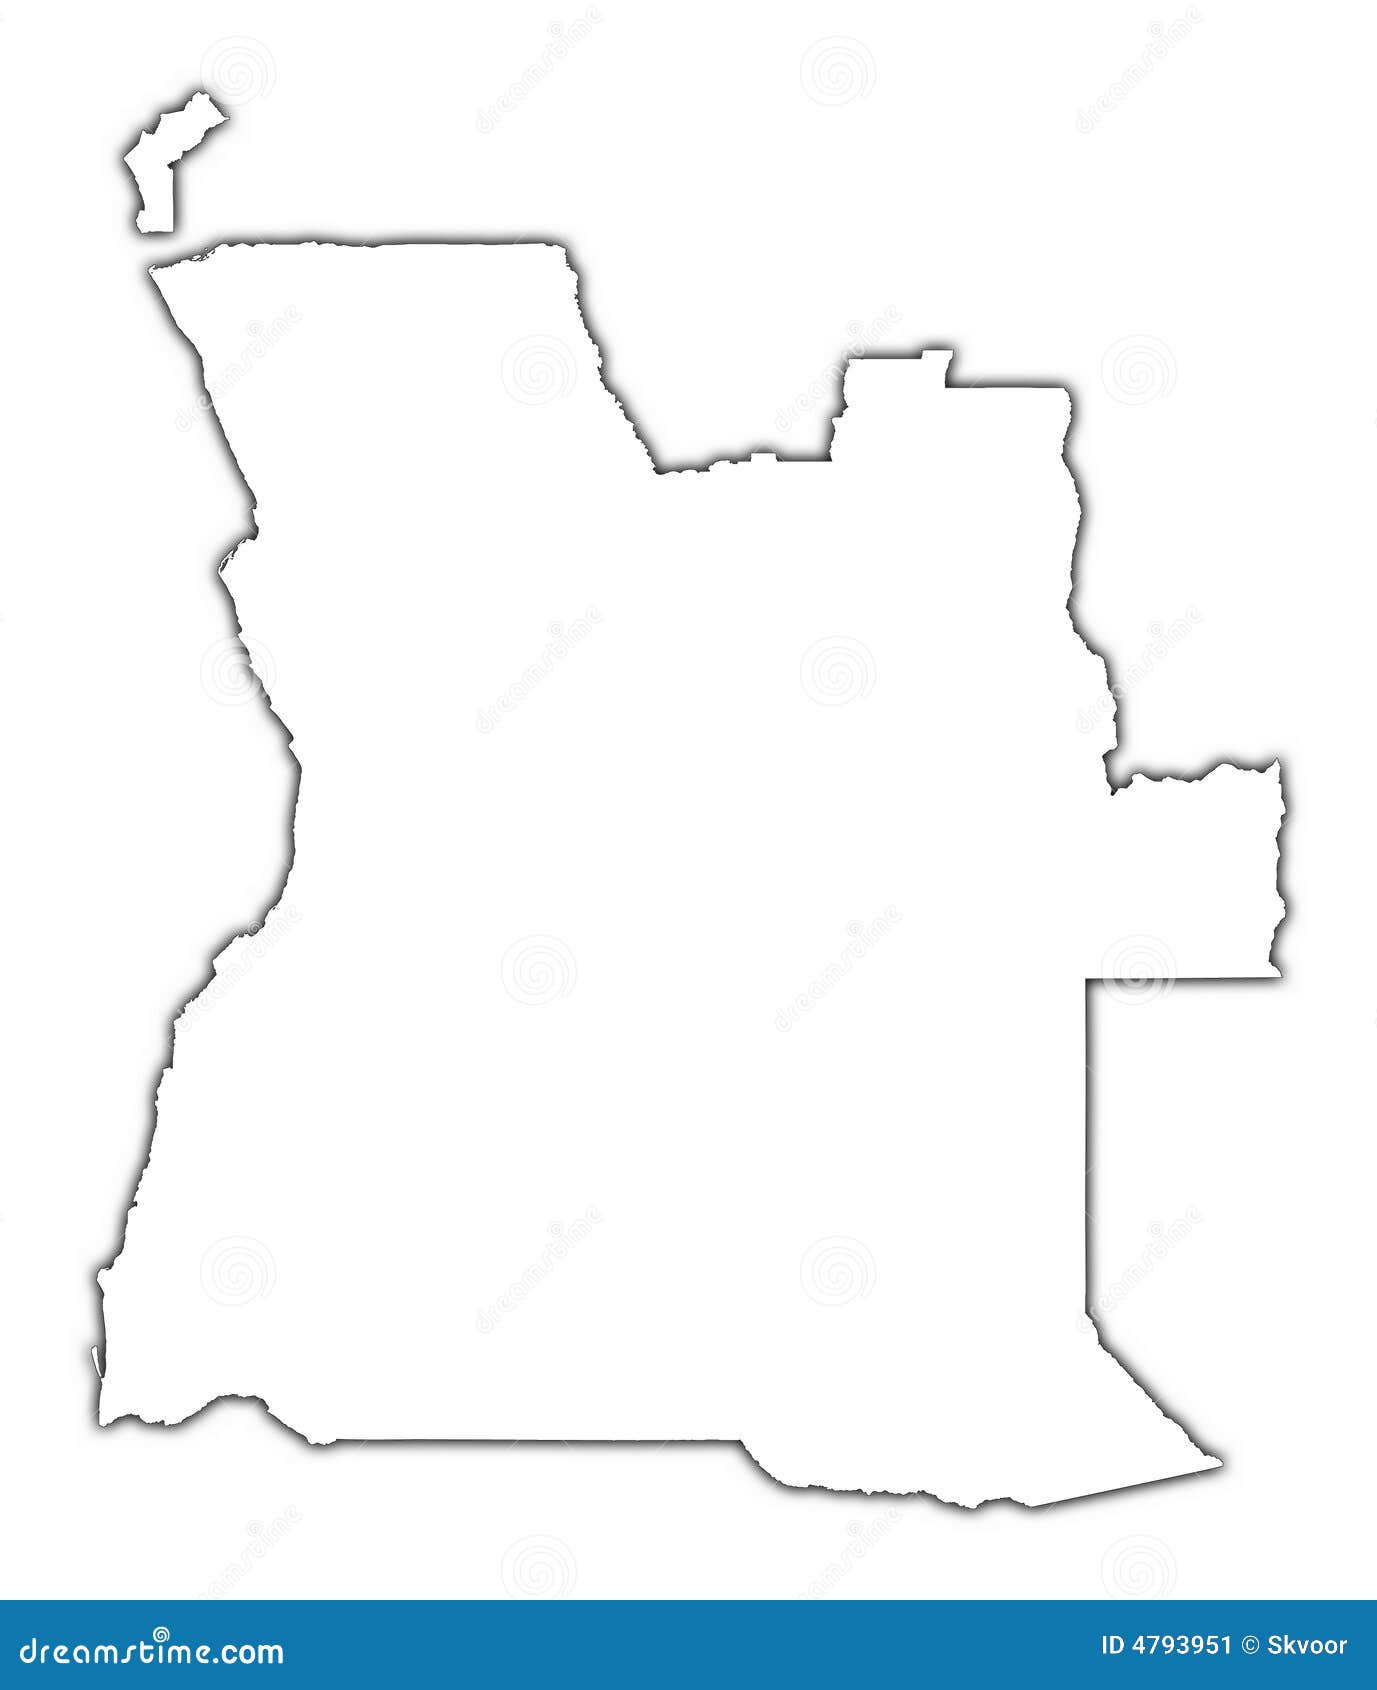 angola outline map